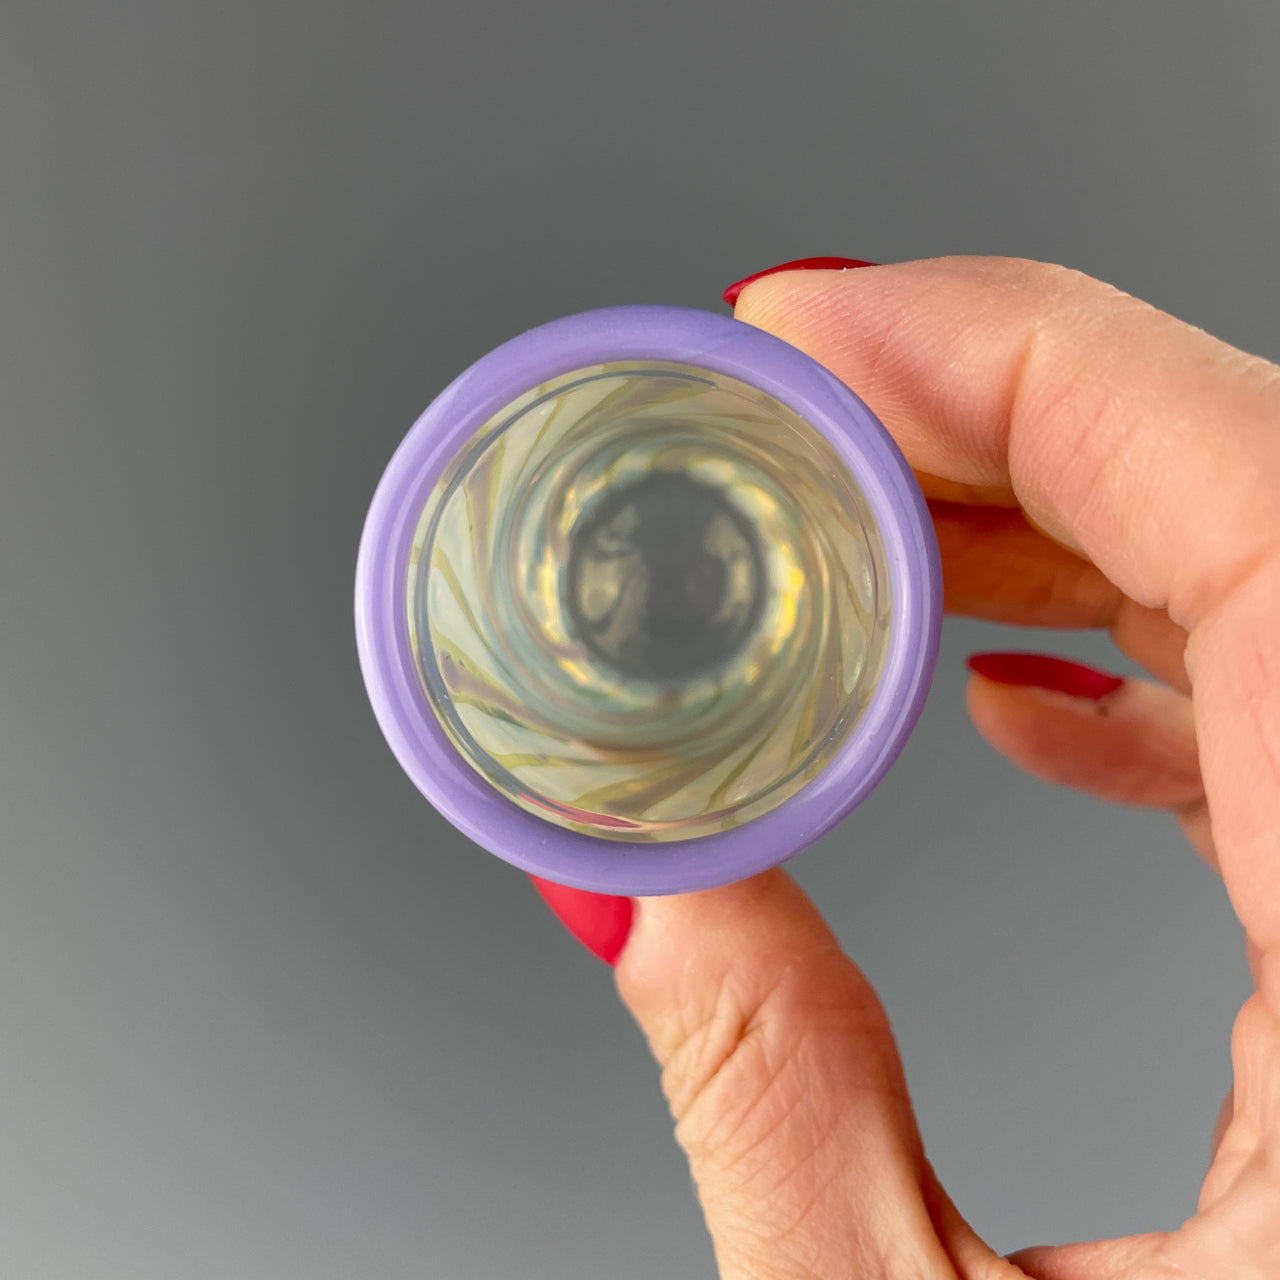 inside of a clear and purple swirls shot glass